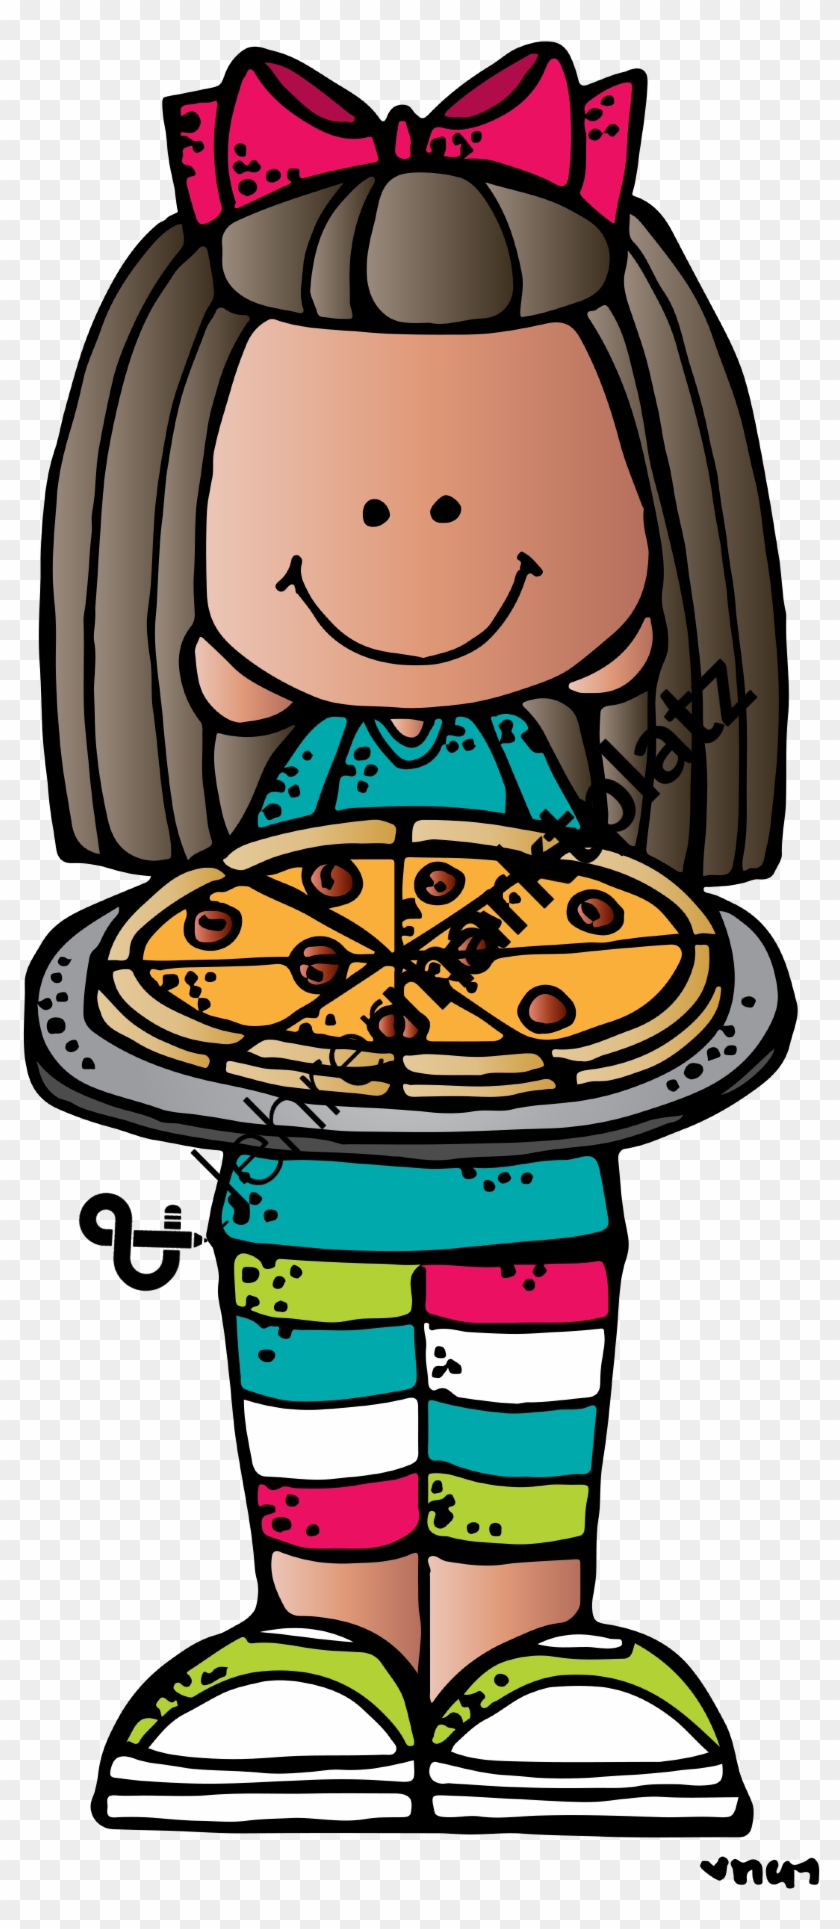 ‹ › - Pizza #228215